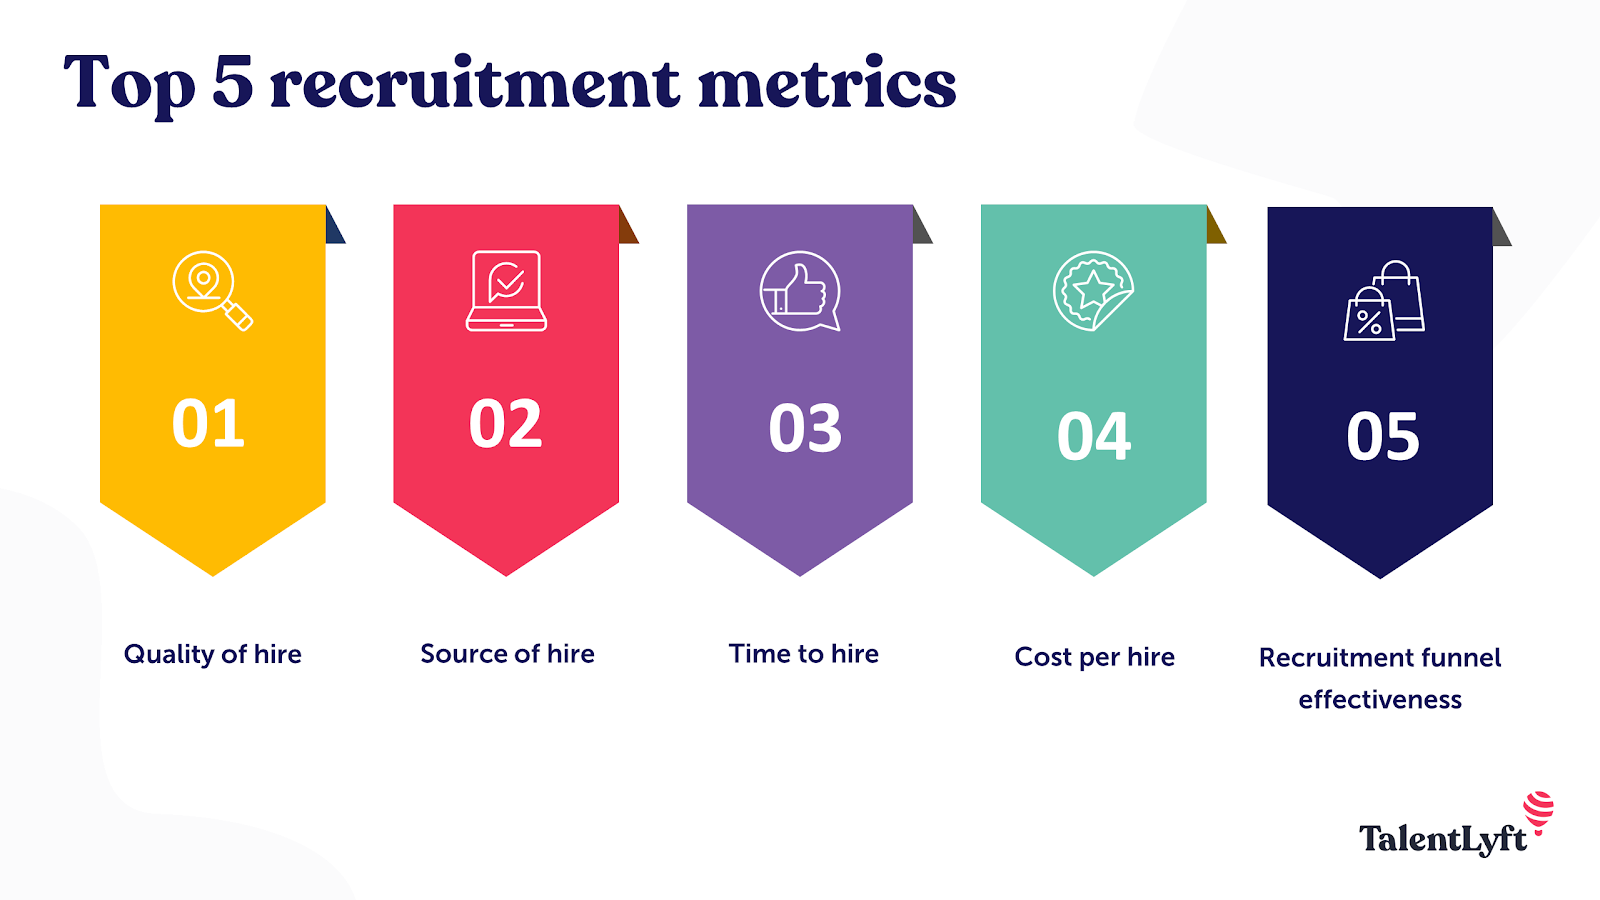 Top 5 recruitment metrics